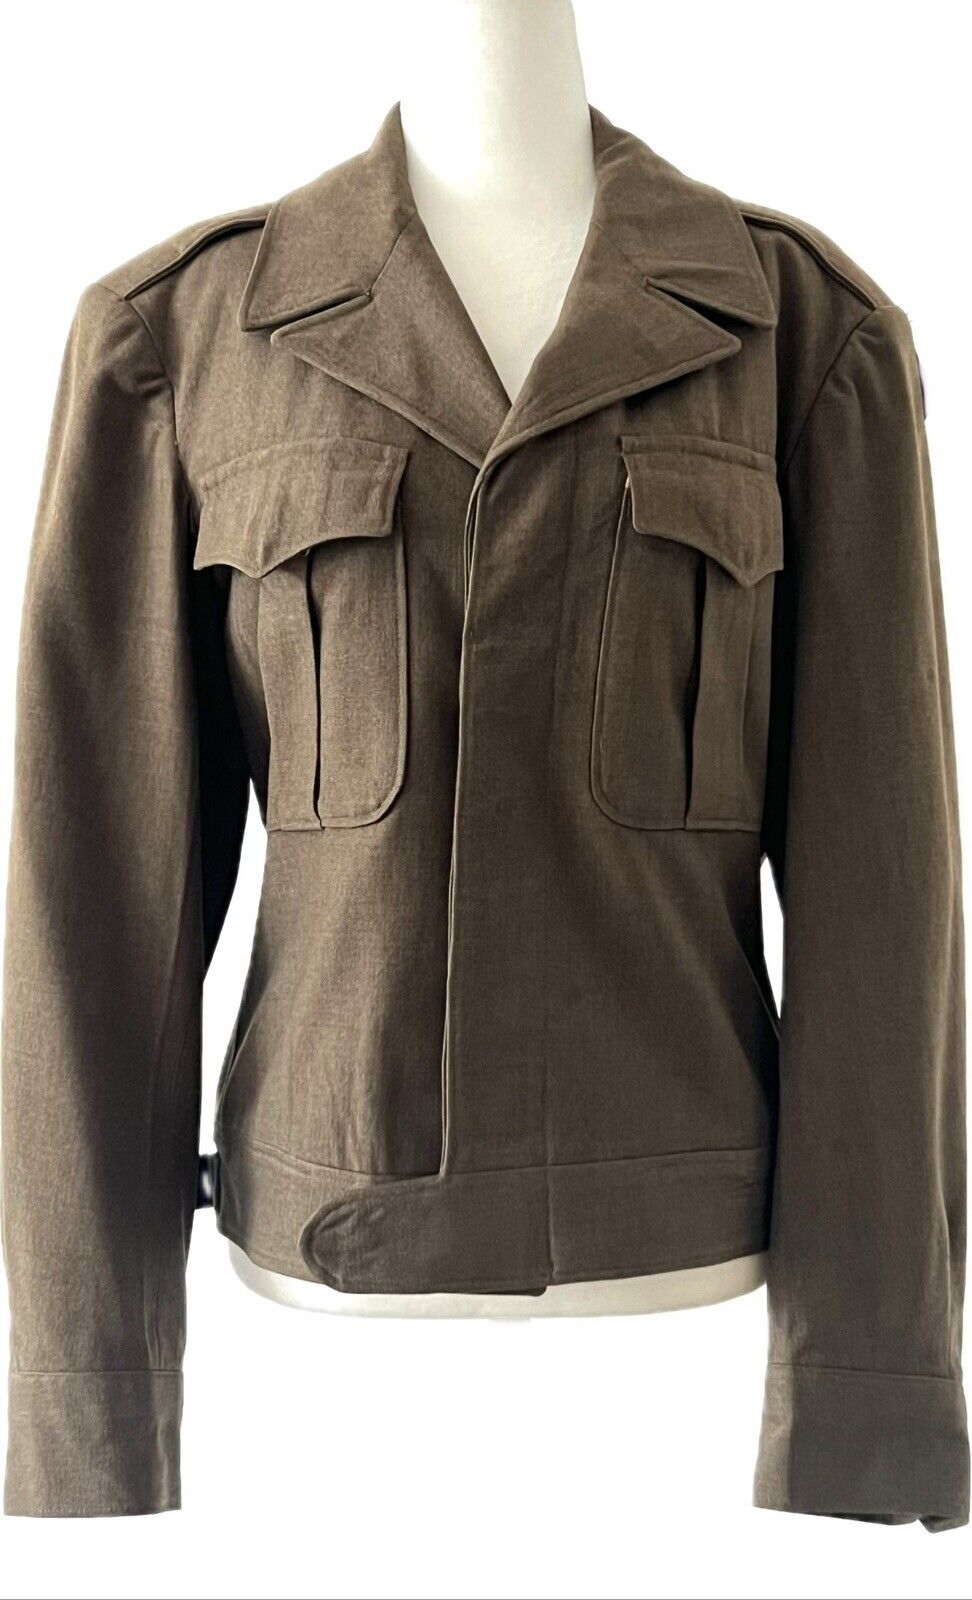 WW2 Wool Jacket Made in USA Dated 1944 Philadelphia QM Depot 36R